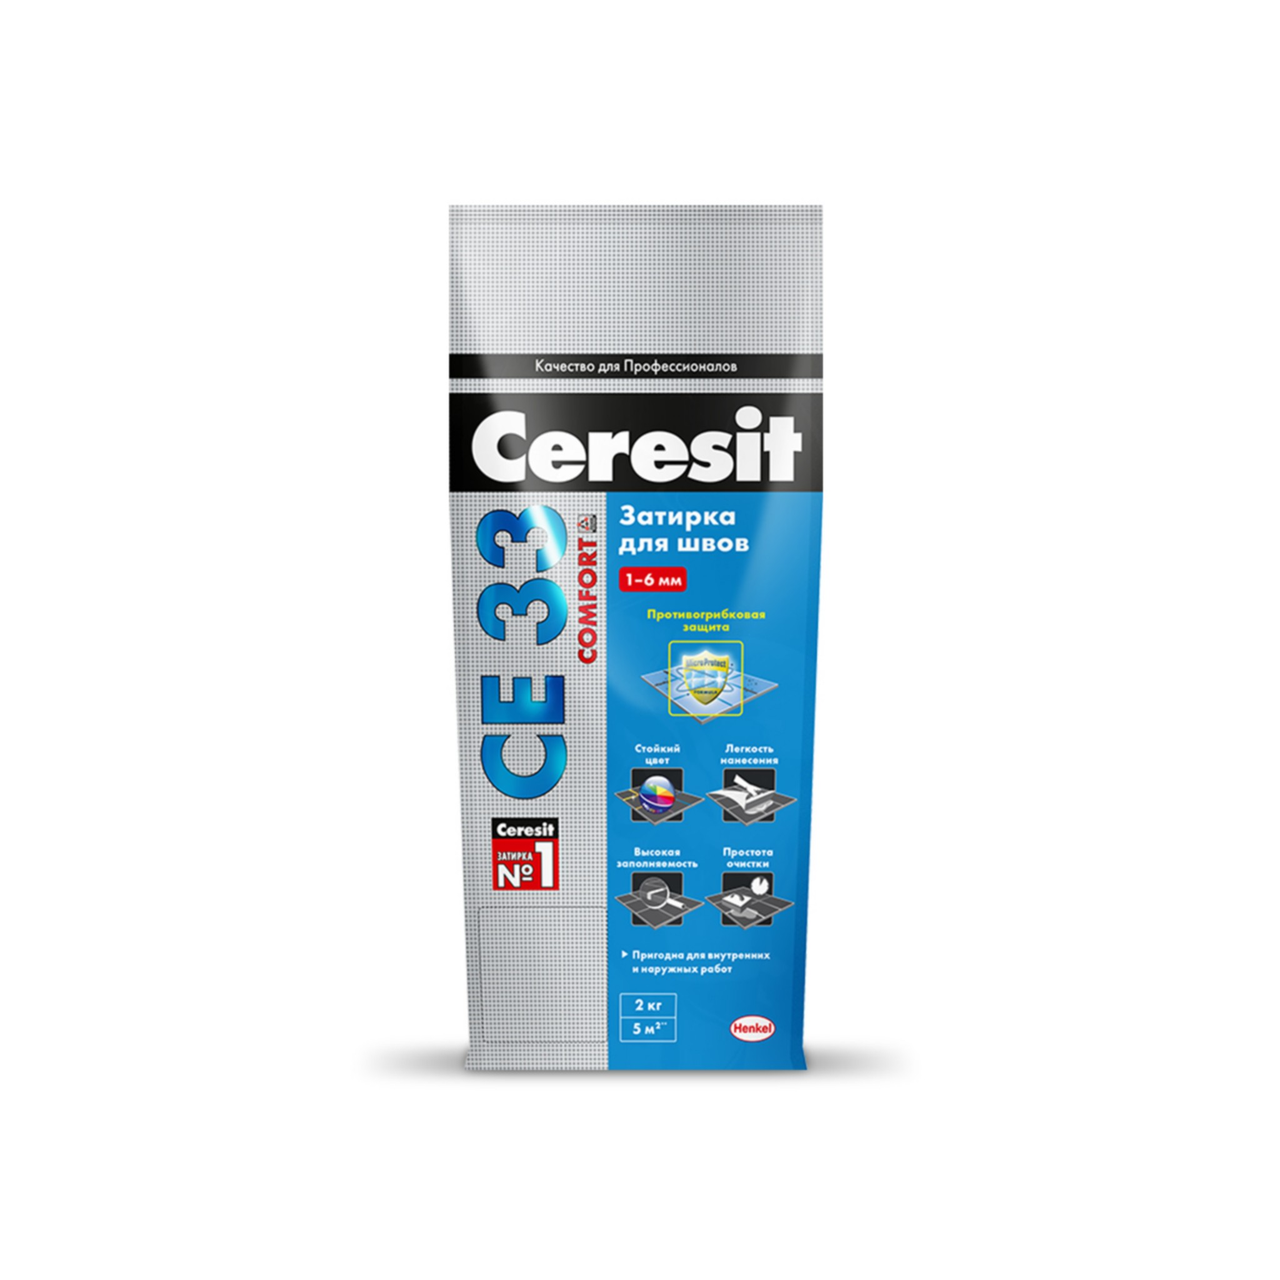 Ceresit  CE 33 Comfort затирка для узких швов, цвет: Какао (Cacao), 2 кг